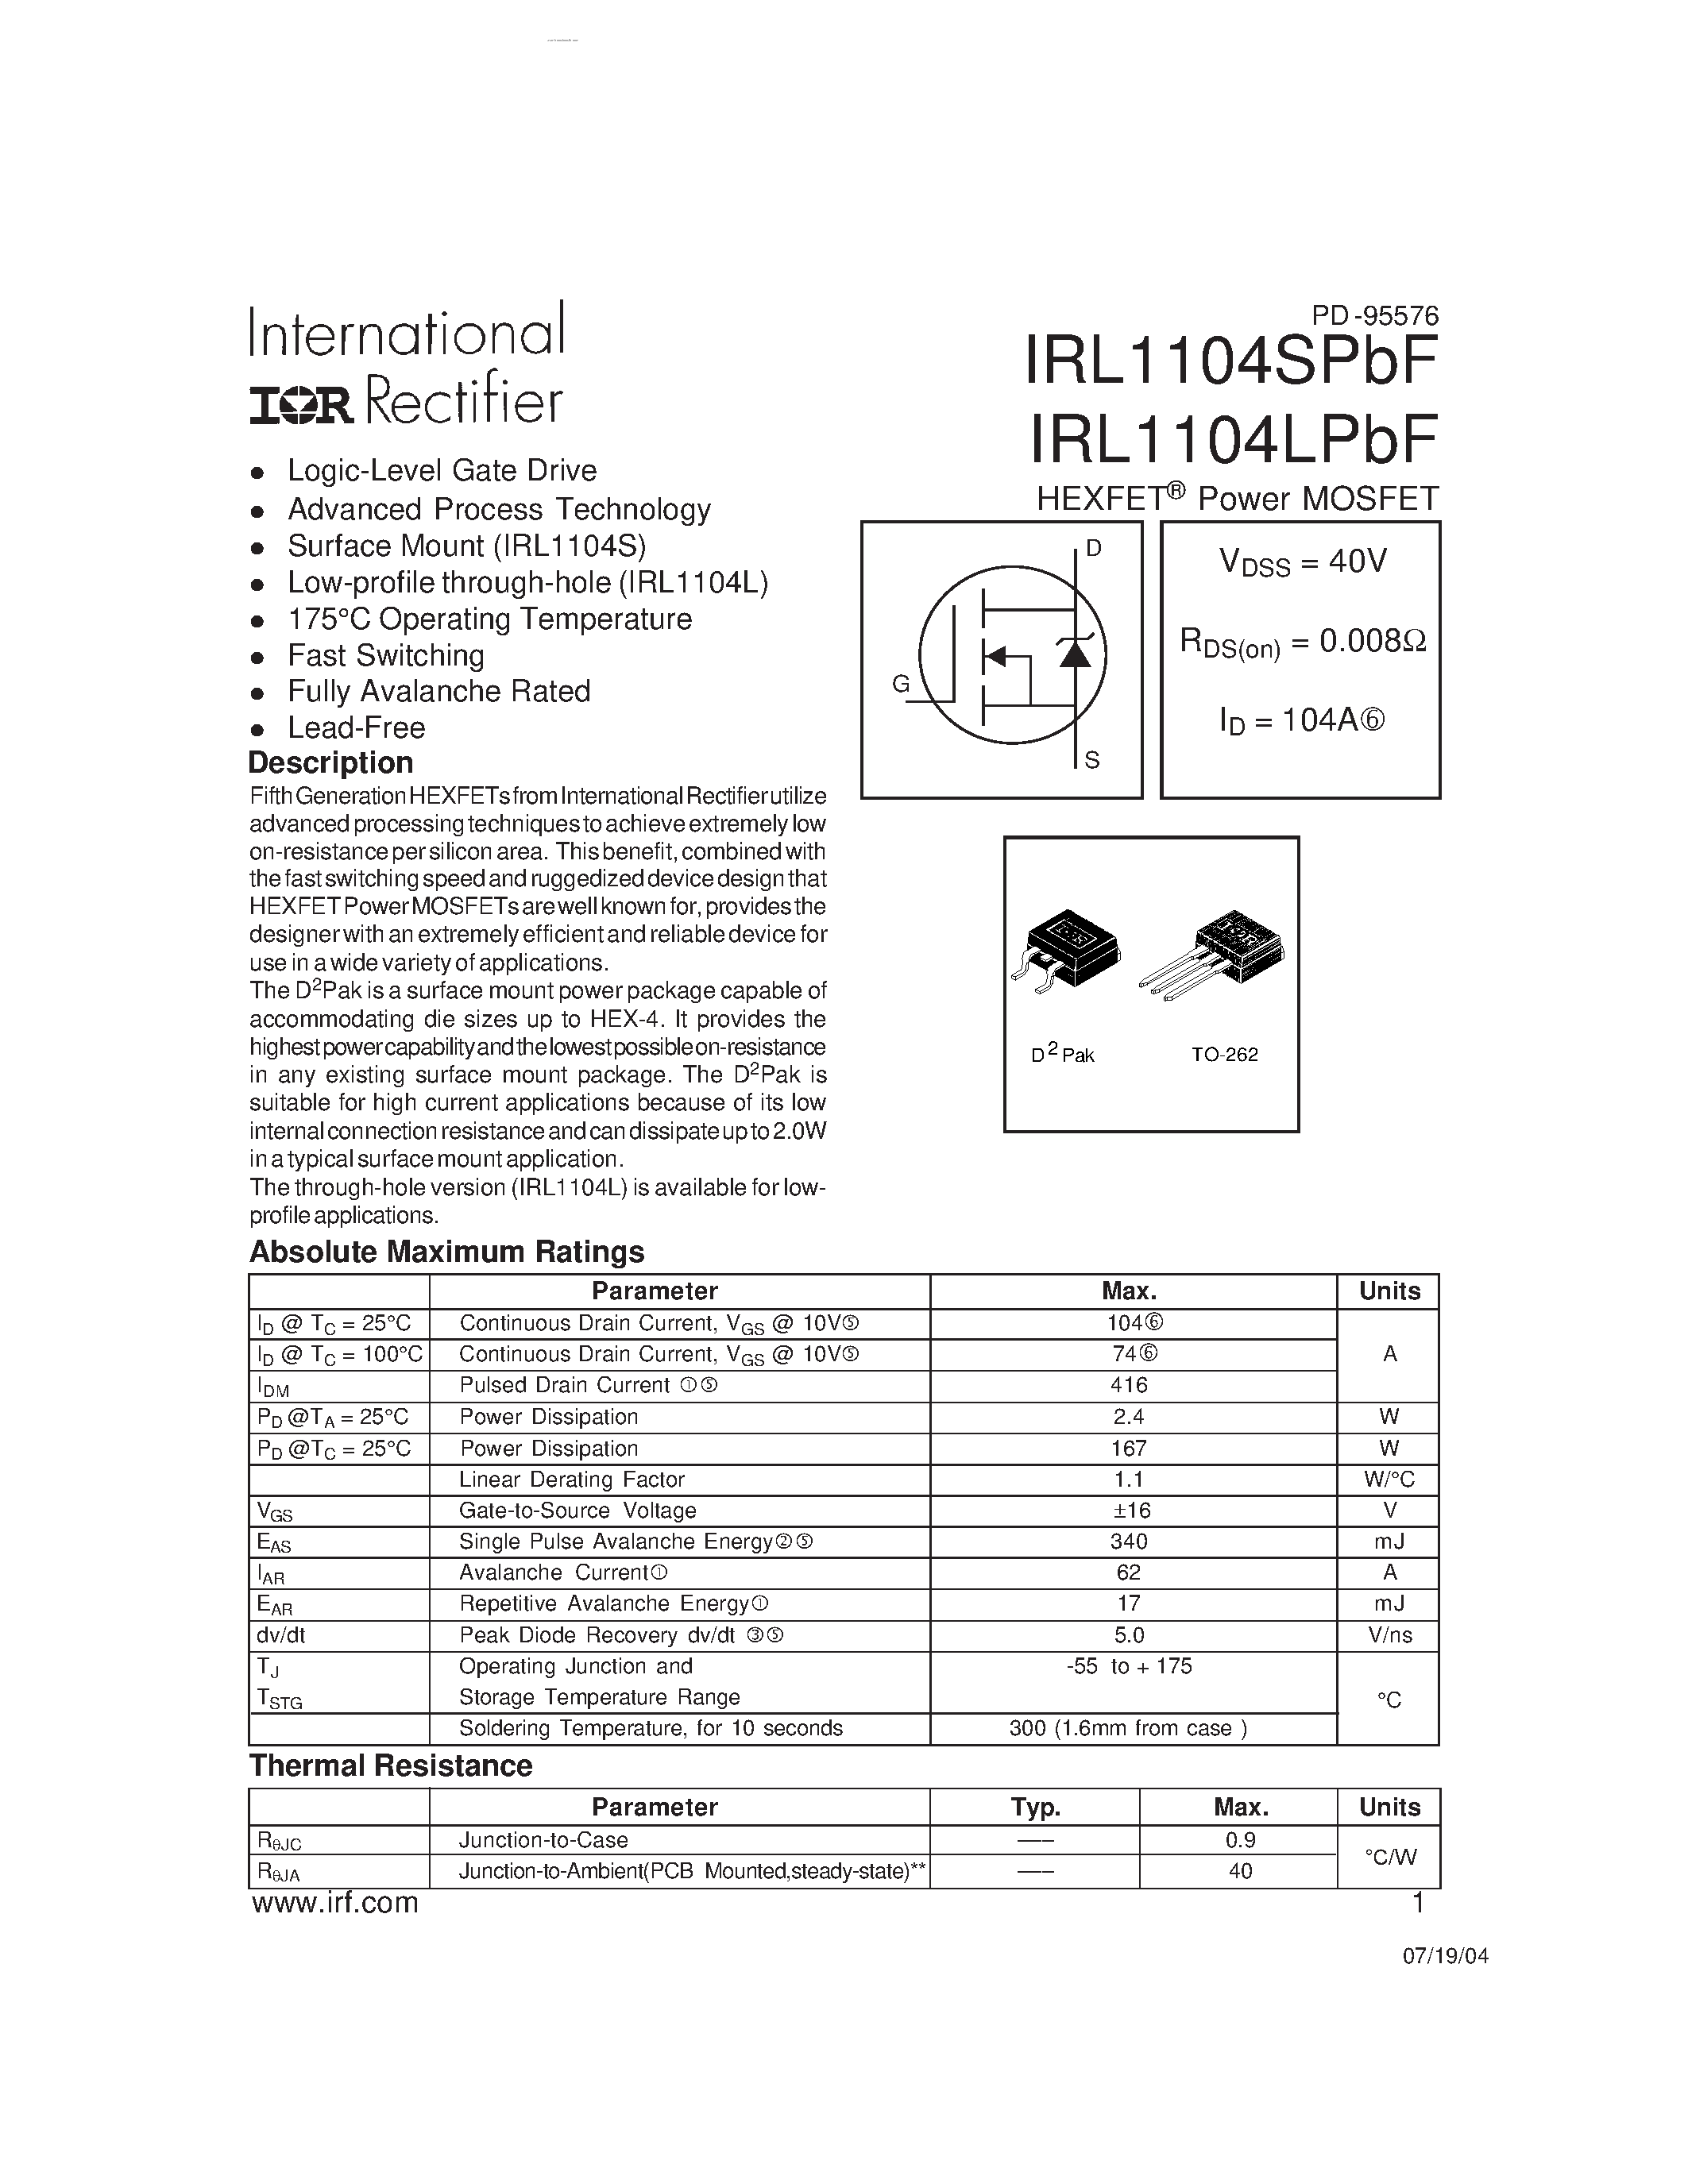 Даташит IRL1104LPBF - HEXFET Power MOSFET страница 1